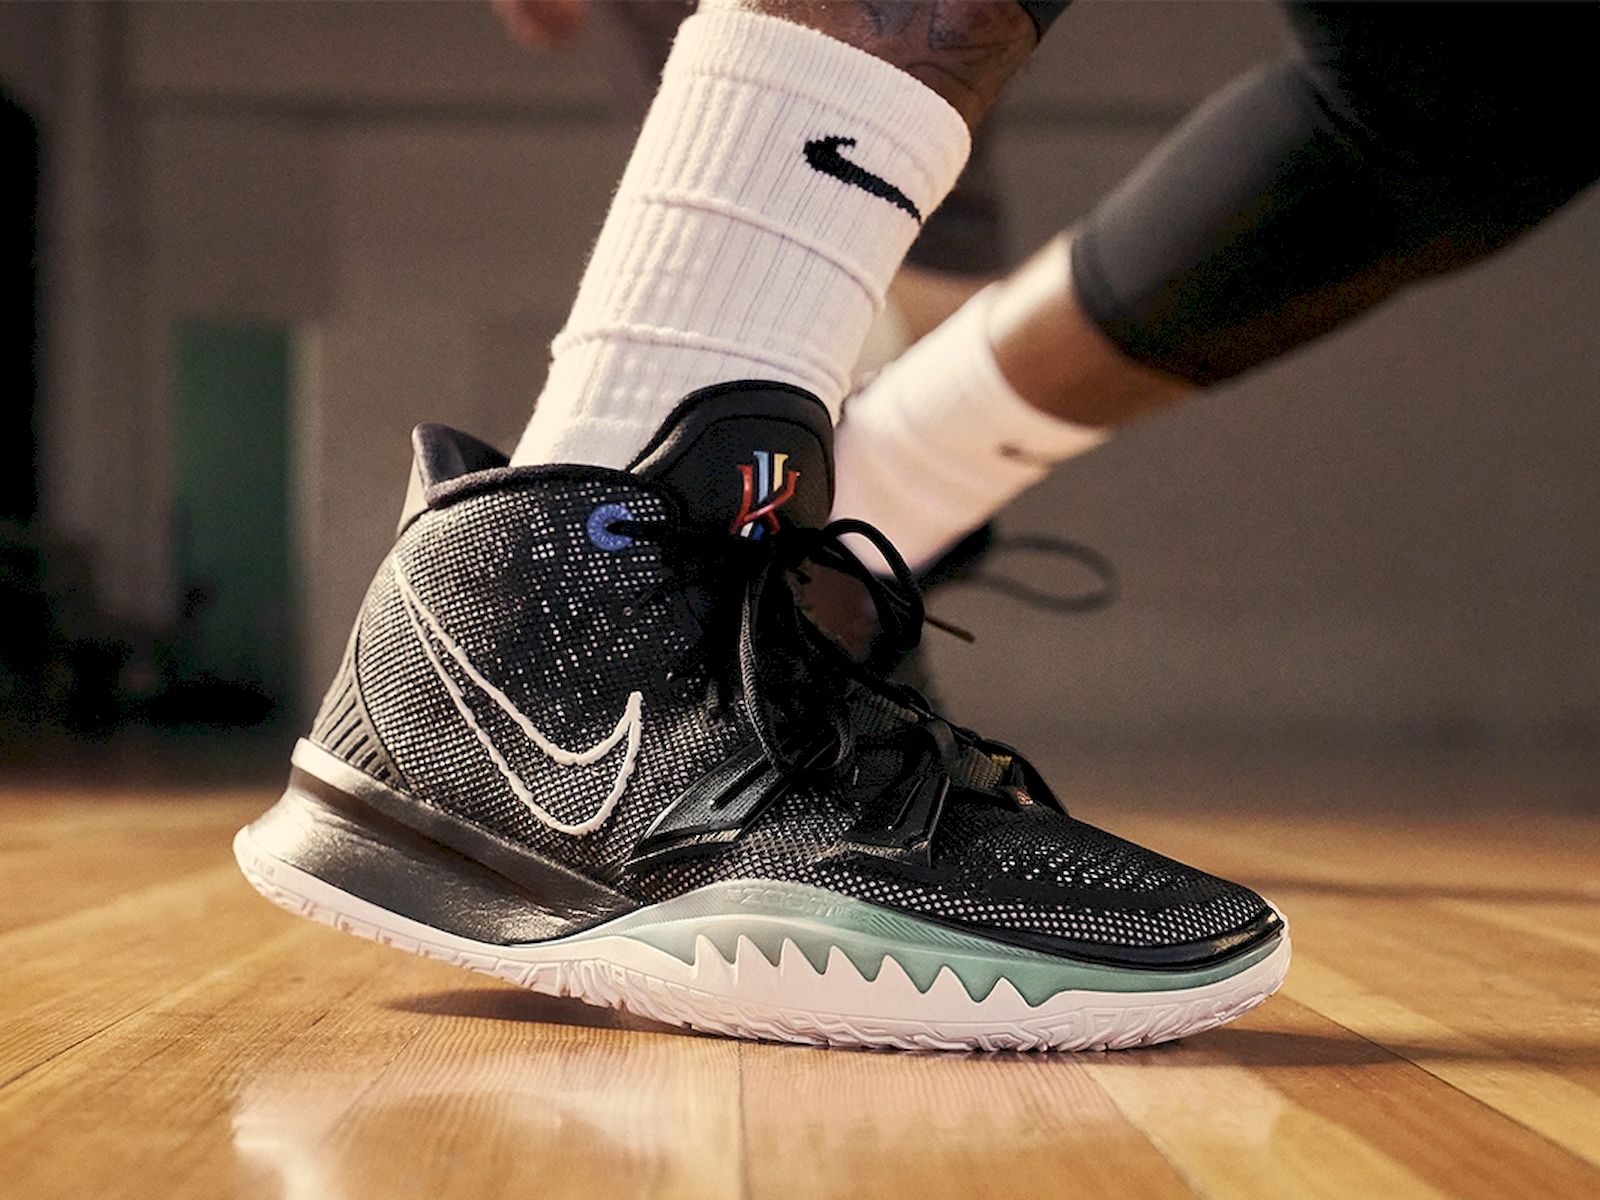 Las zapatillas de baloncesto Nike Kartal